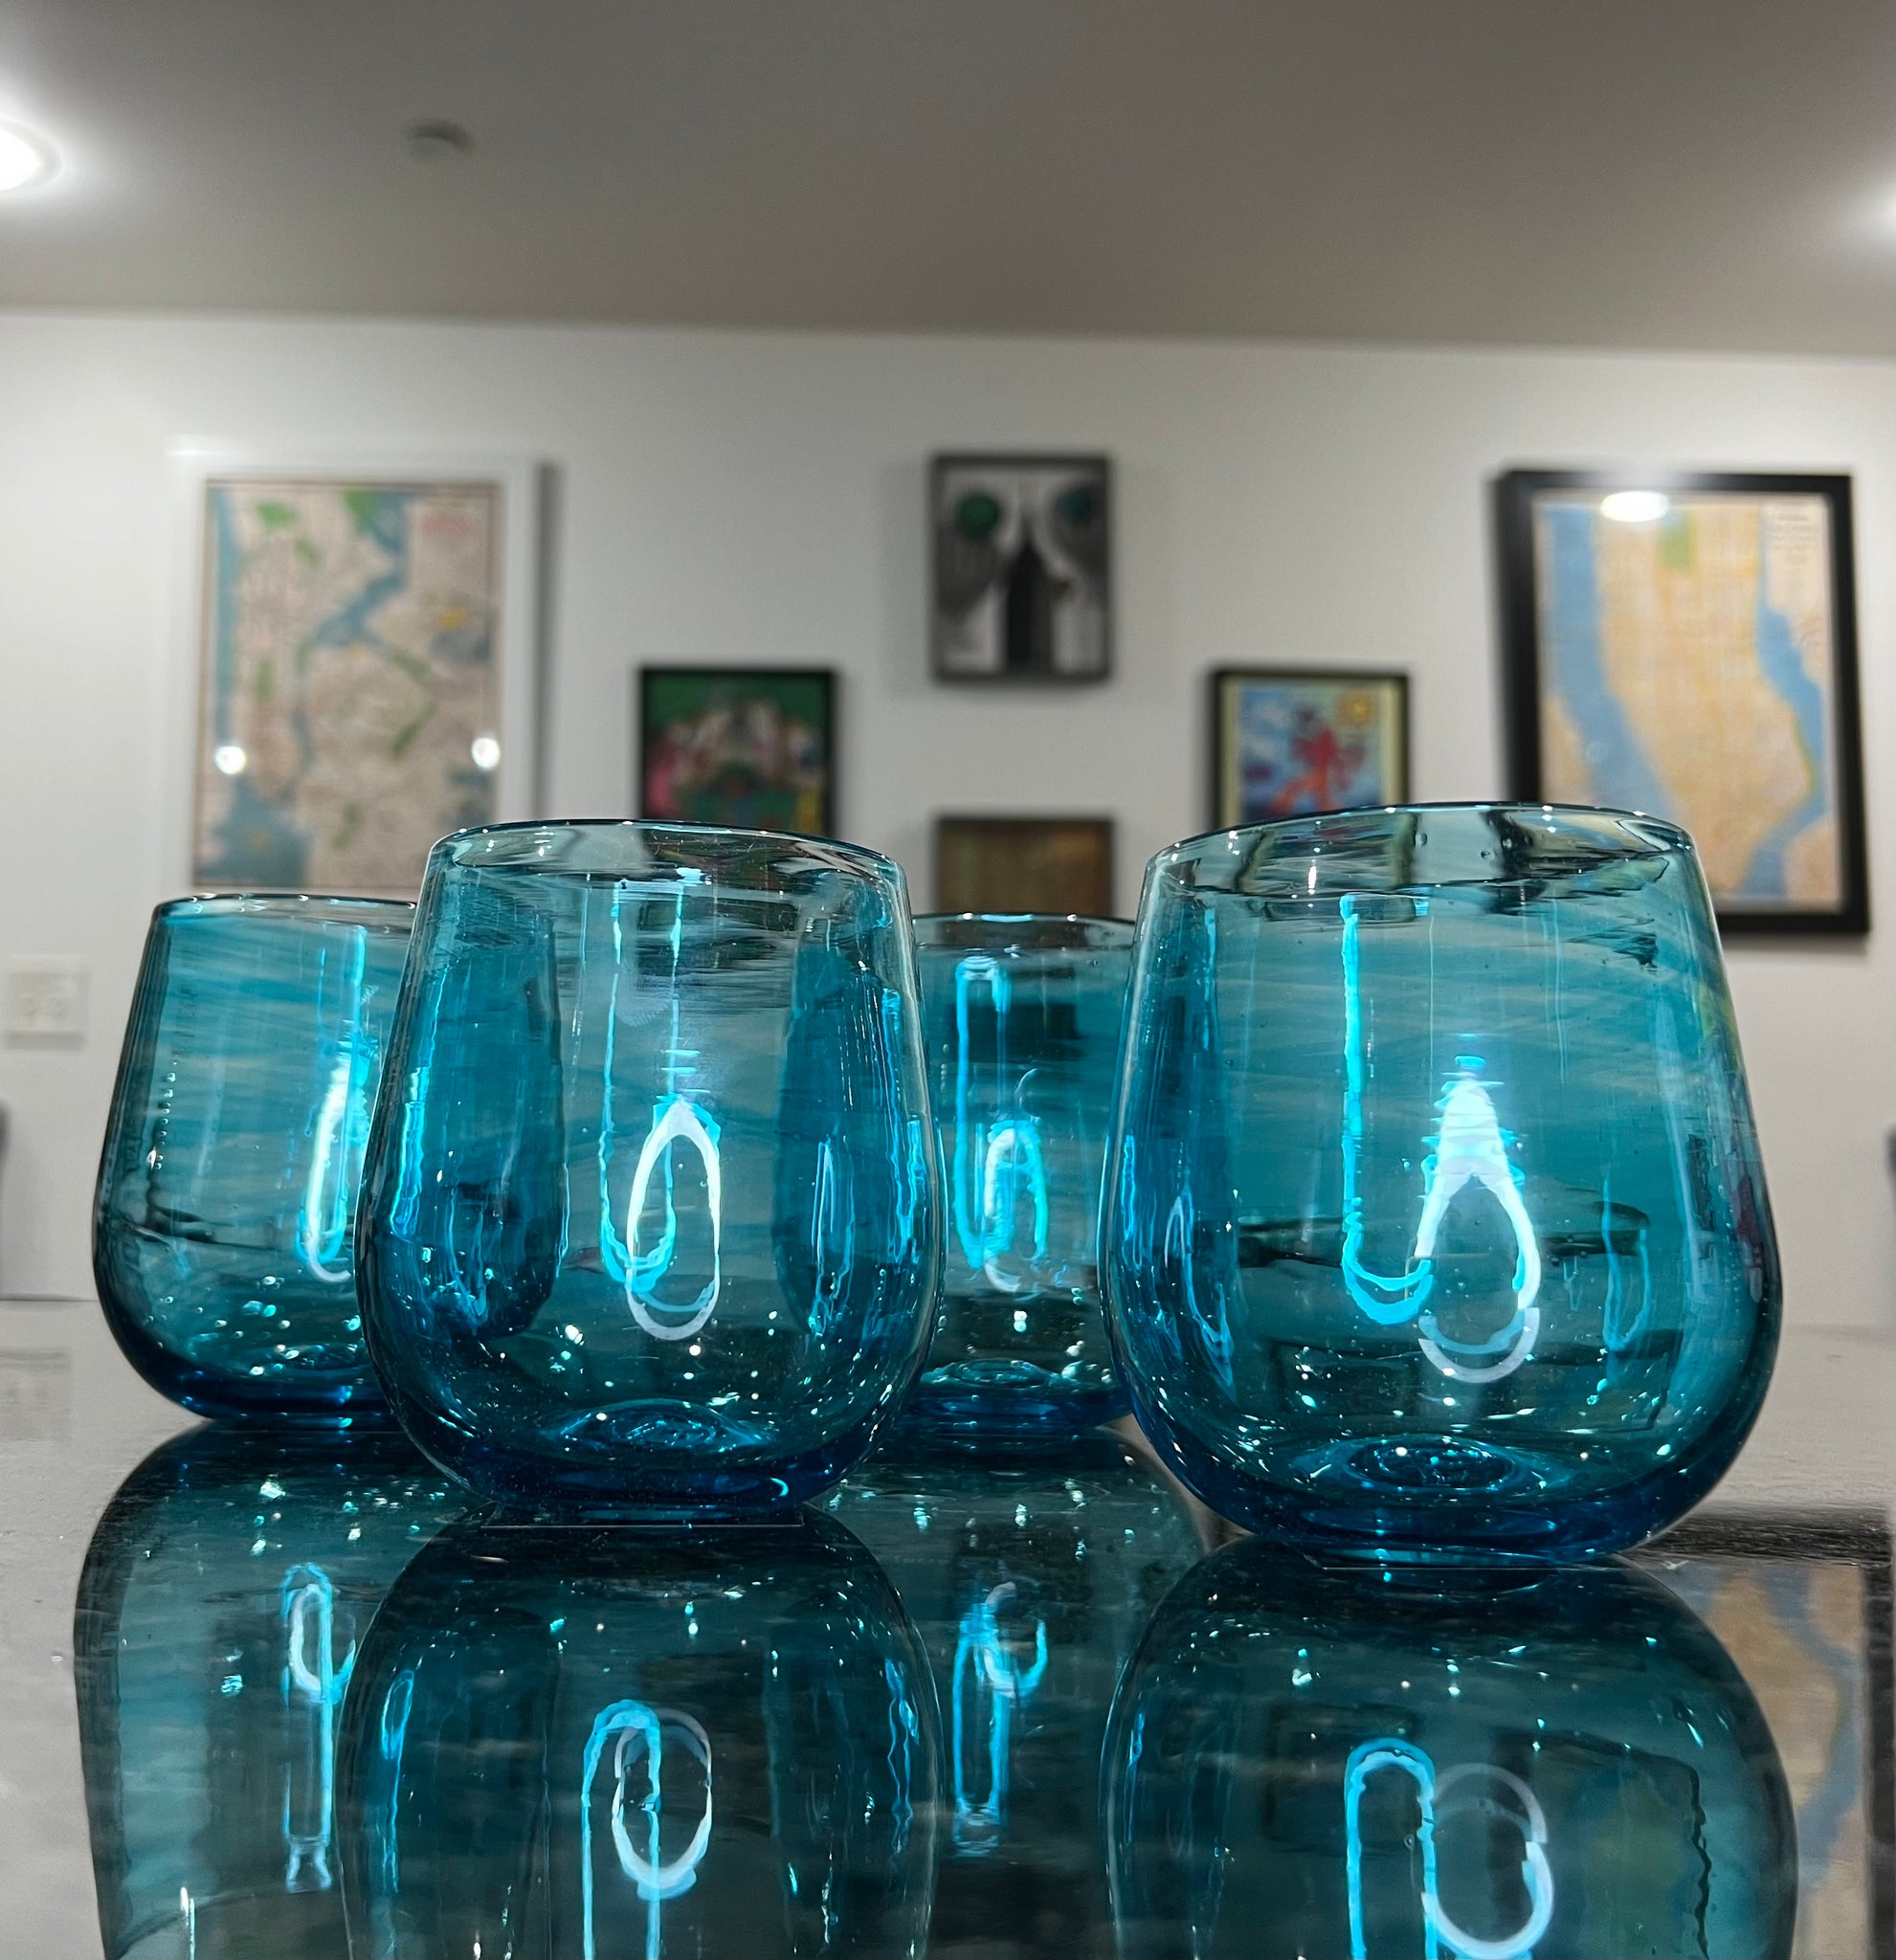 Mini Wine Glasses – bluewine studio